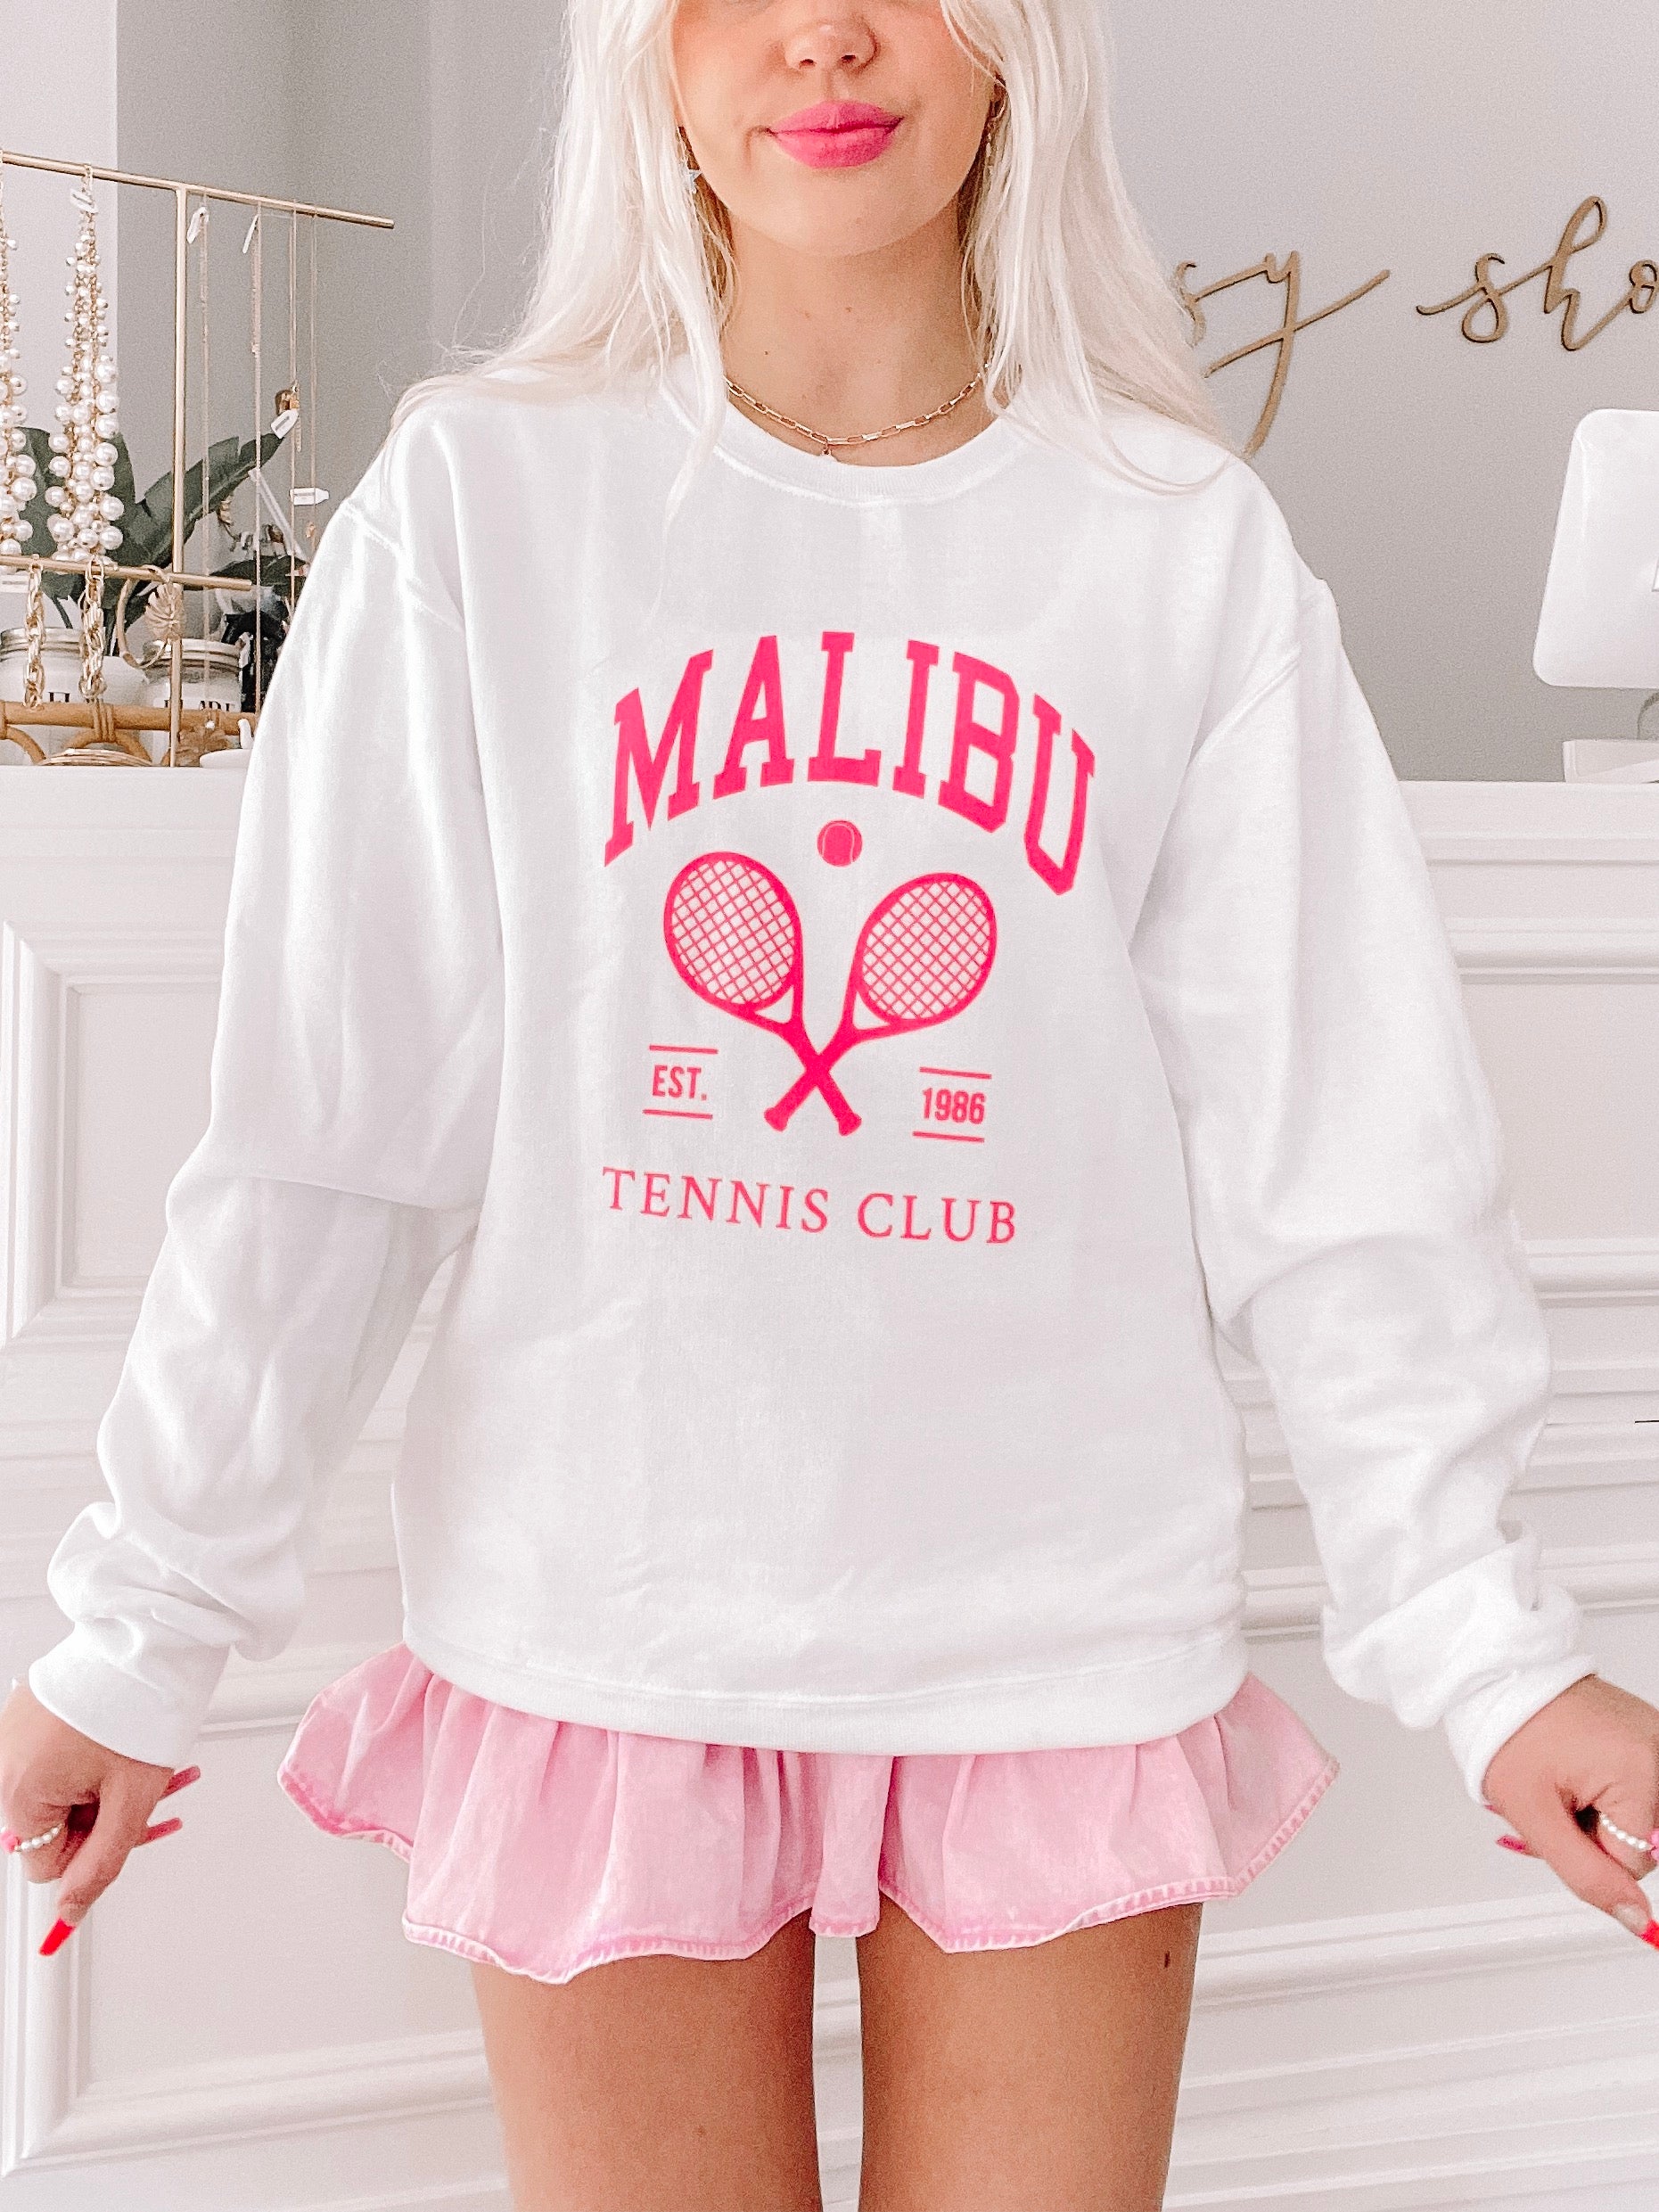 Malibu Tennis Club White Crewneck | Sassy Shortcake Boutique | sassyshortcake.com